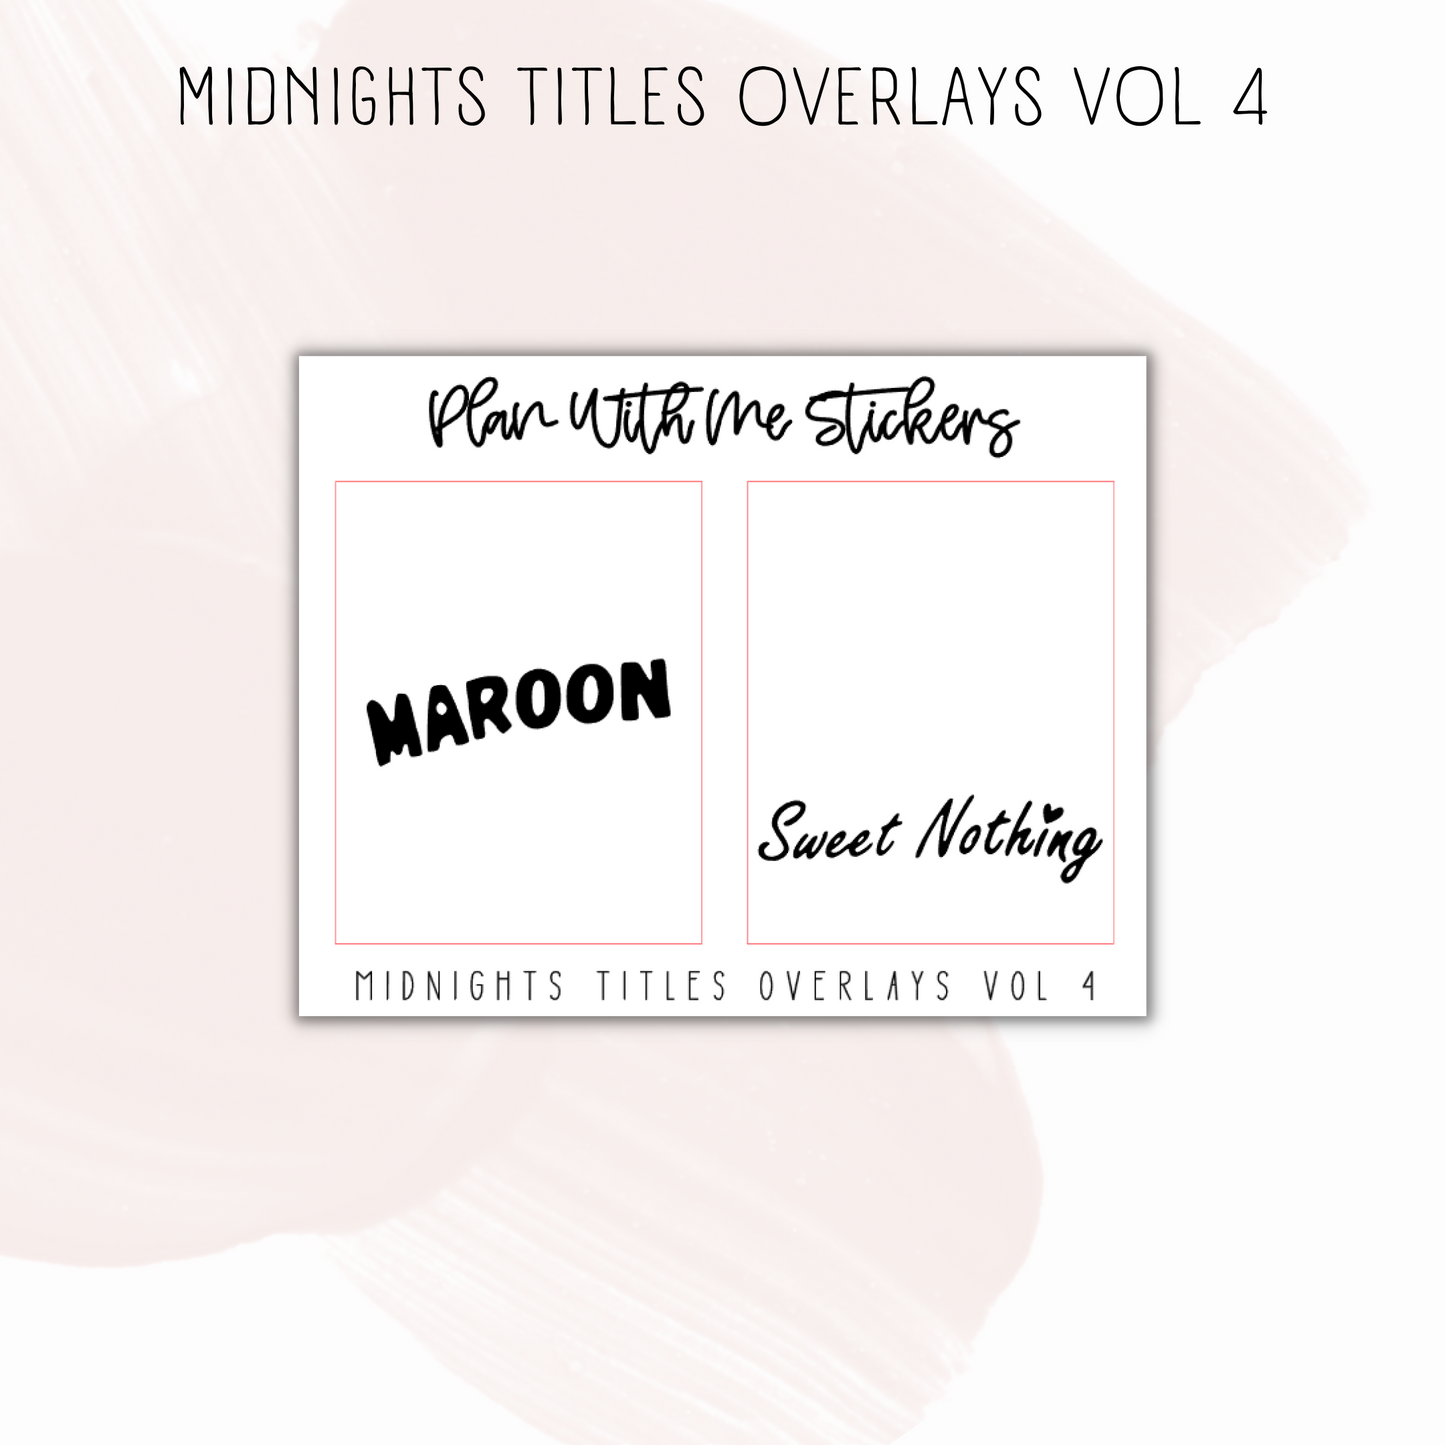 Midnights Titles Overlays (Vol 4)